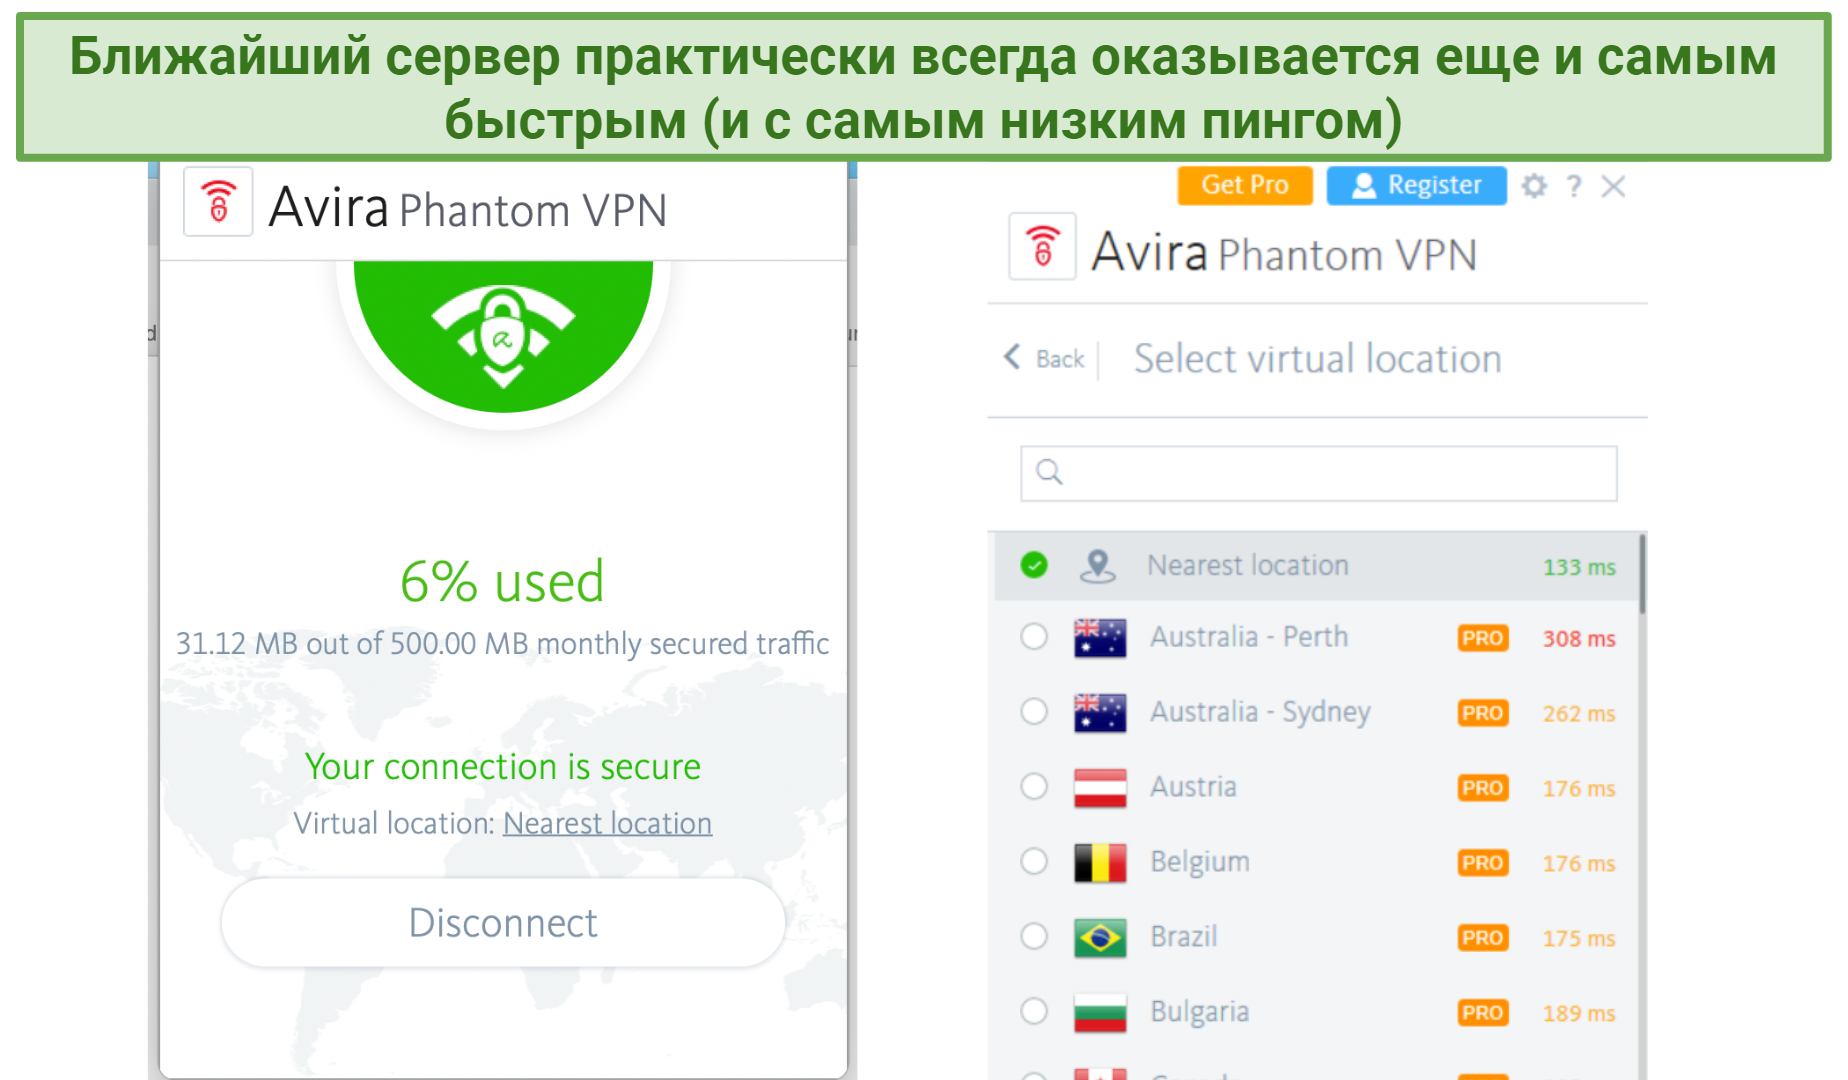 Screenshot showing the home screen and server list on Avira Phantom VPN